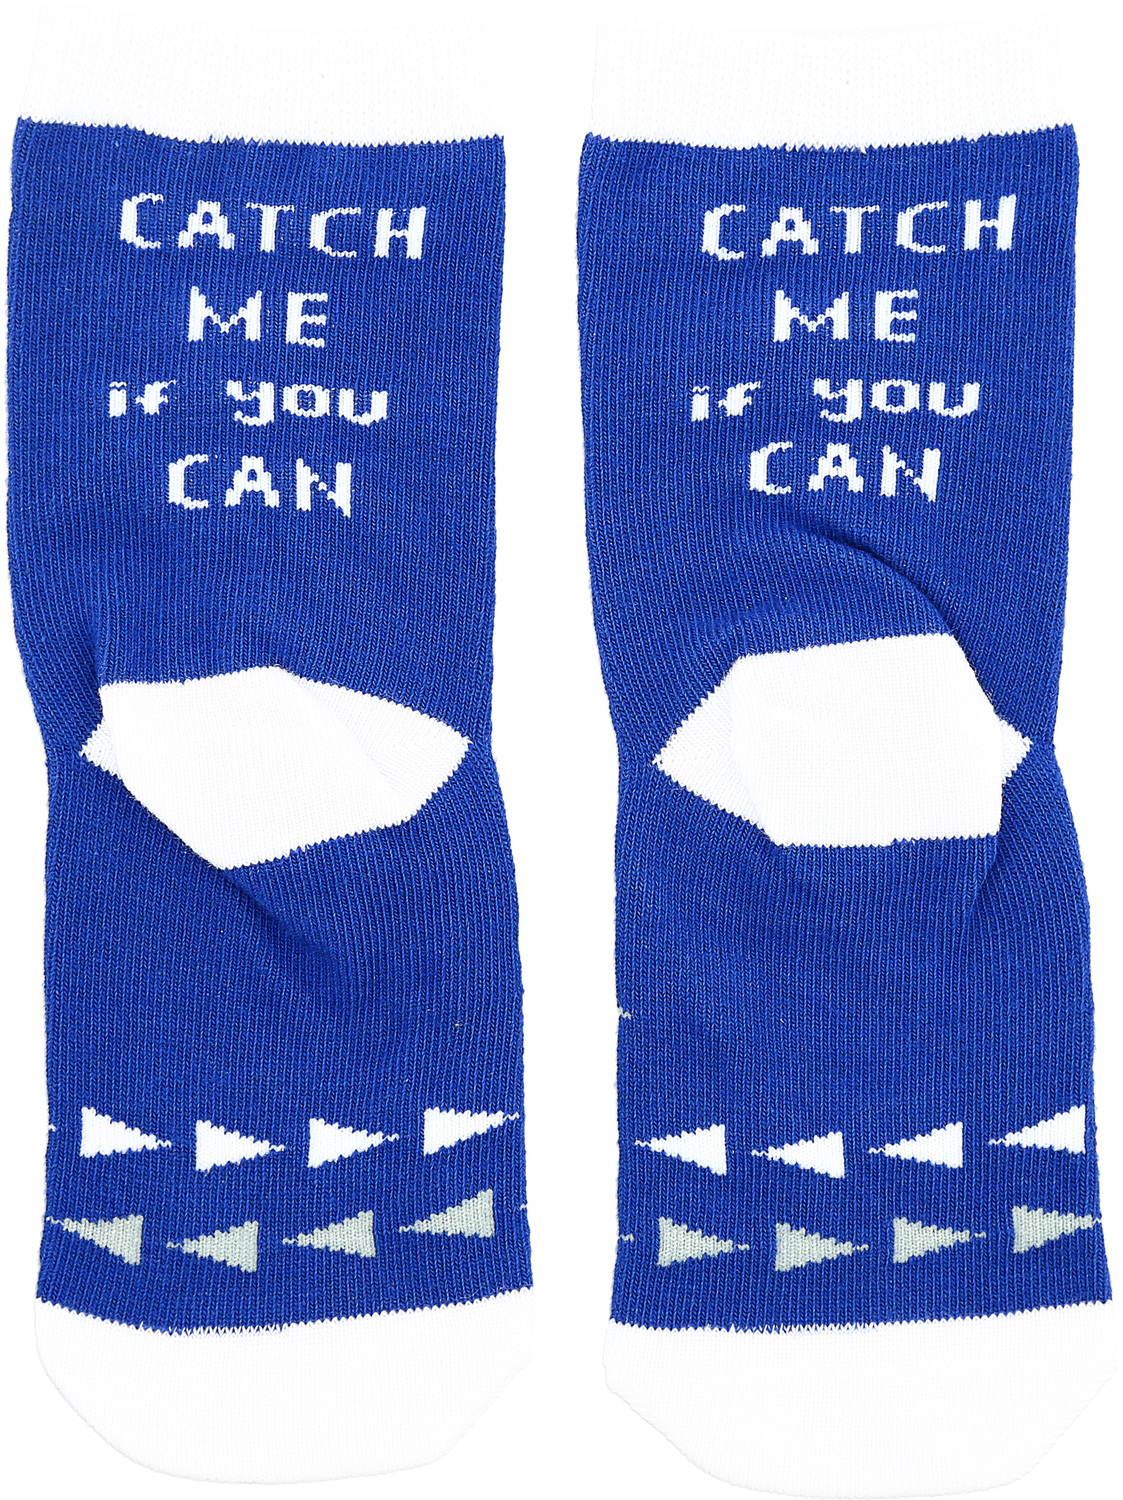 Catch Me by Sidewalk Talk - Catch Me - 2T-4T Crew Socks